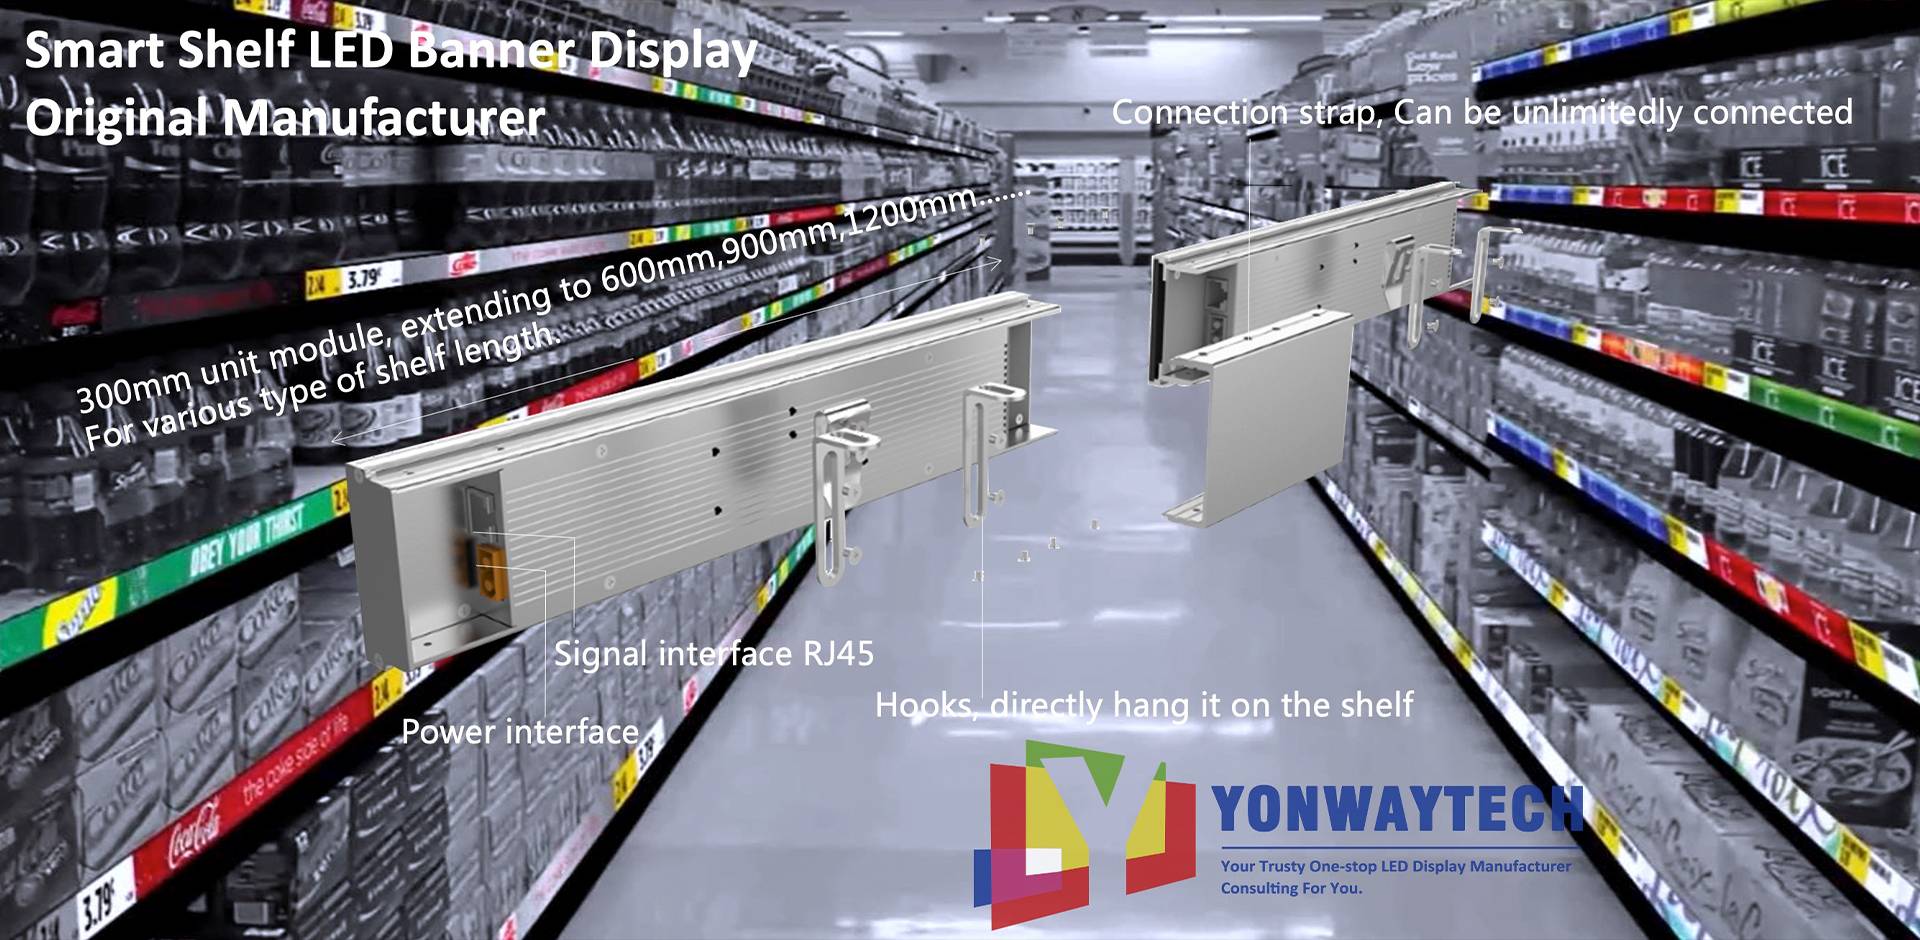 Smartshelf LED Banner Display,Digital Price Tags,Smart Shelf Screen. Yonwaytech,Your Trustworthy One-stop LED Display Manufacturer